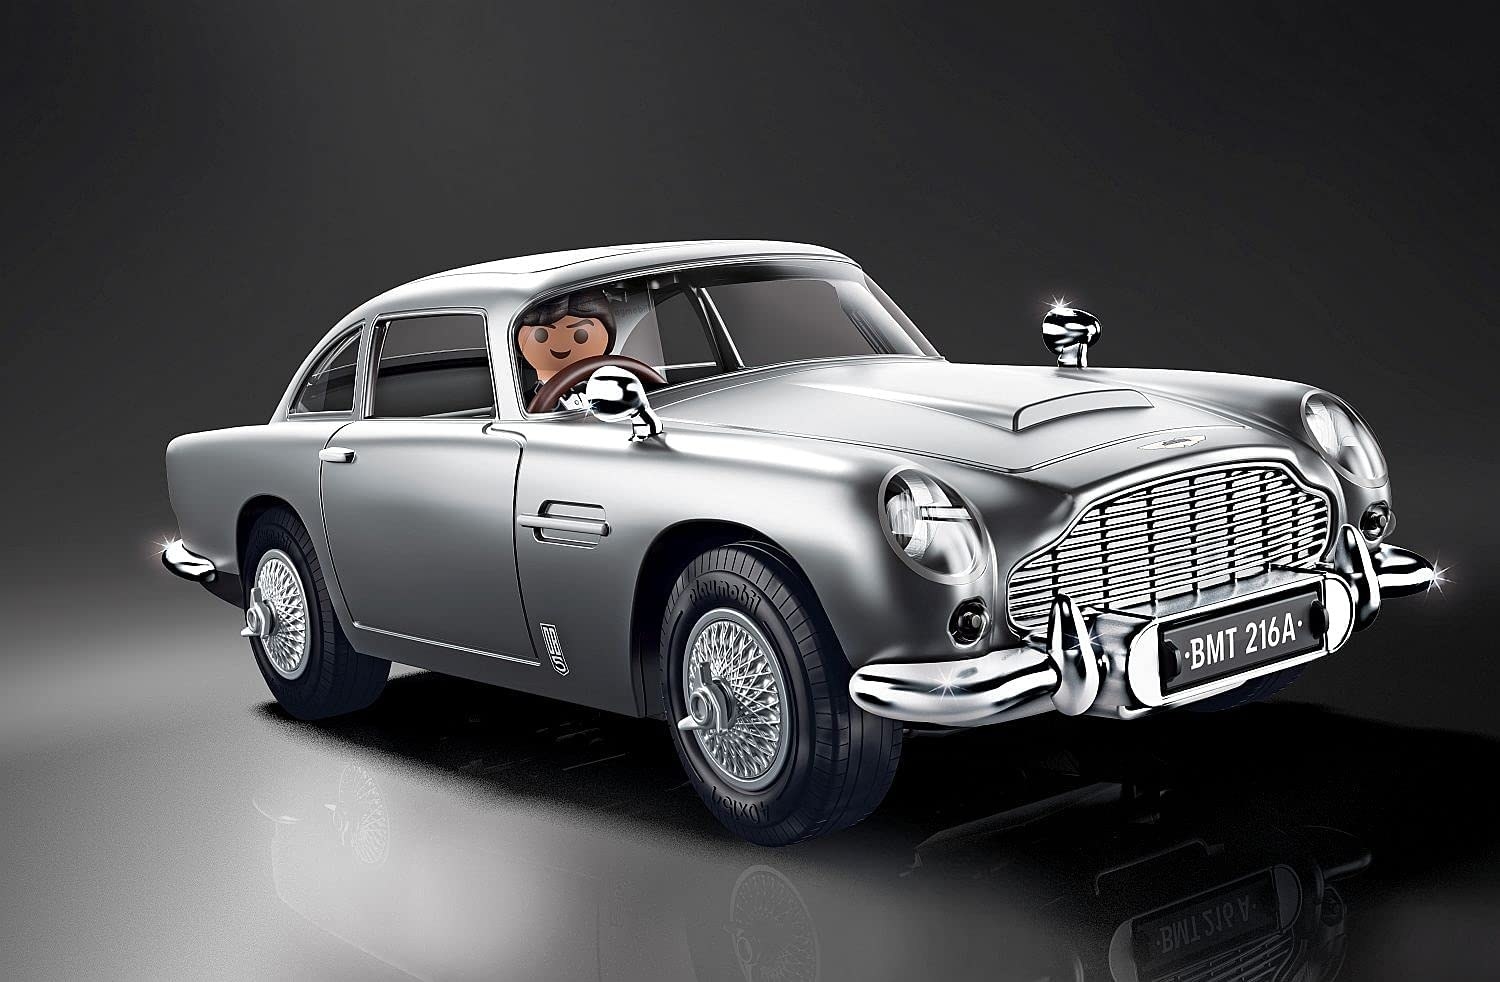 Playmobil del Aston Martin de James Bond